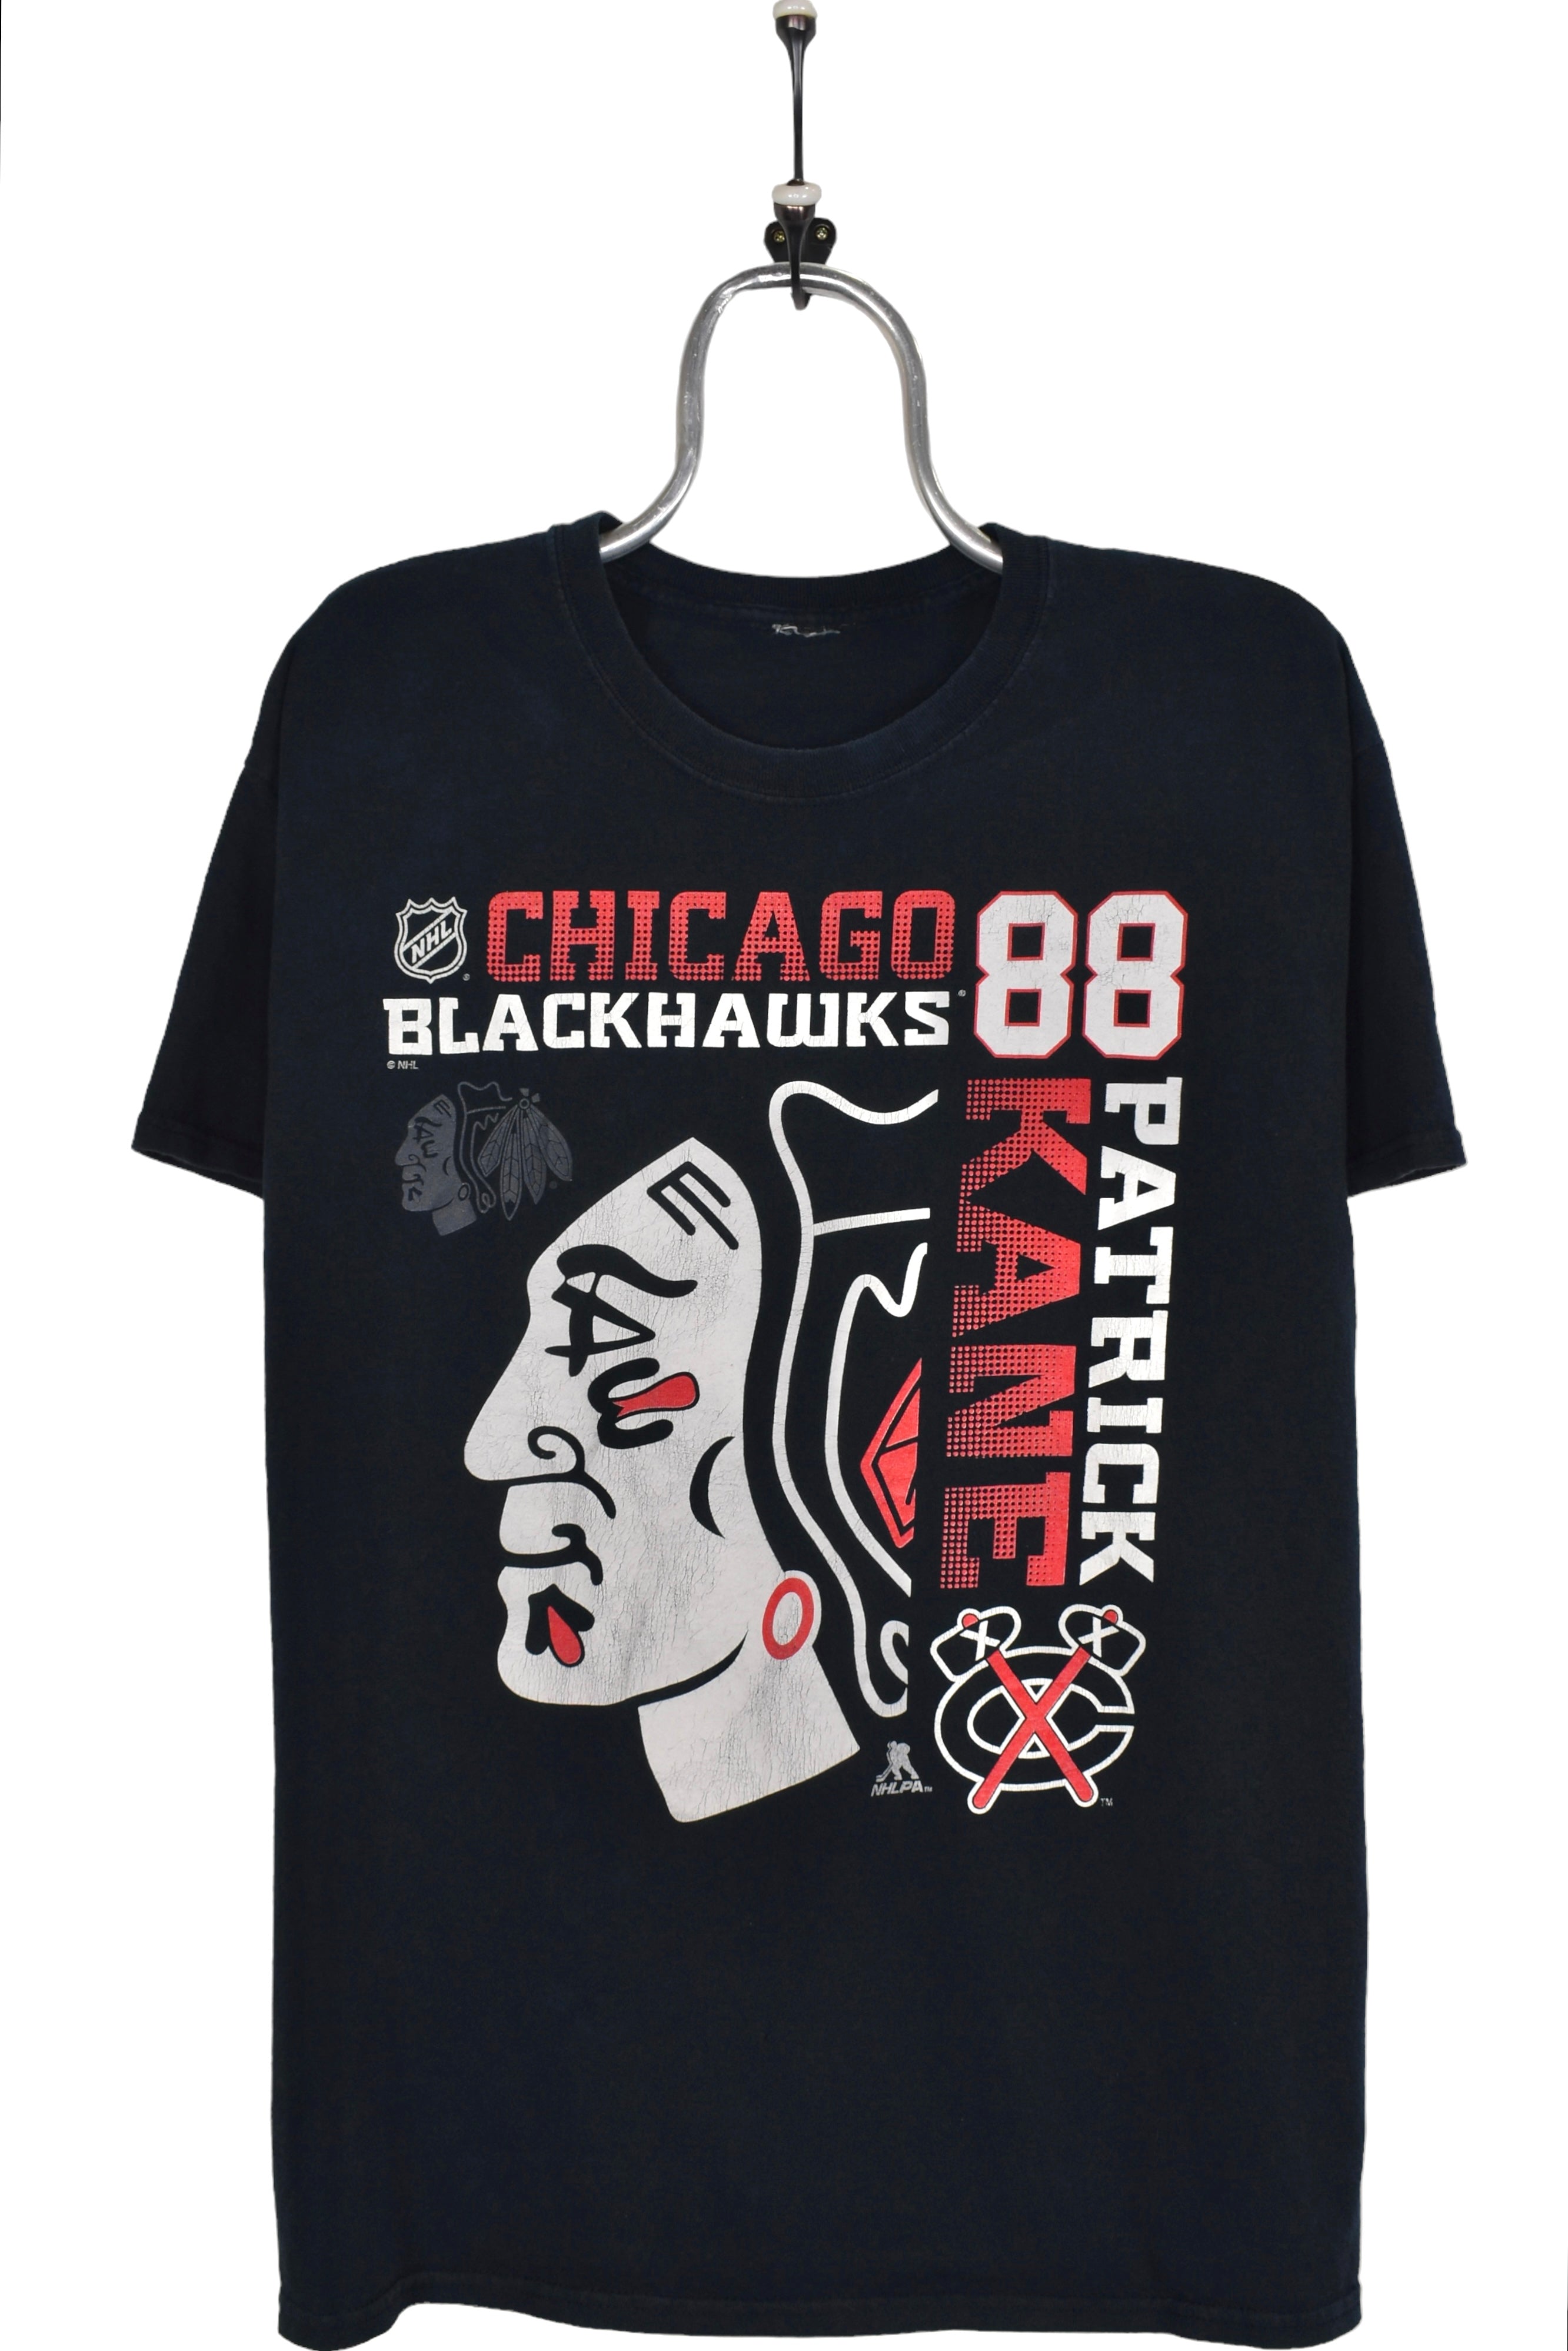 Vintage Chicago Blackhawks shirt